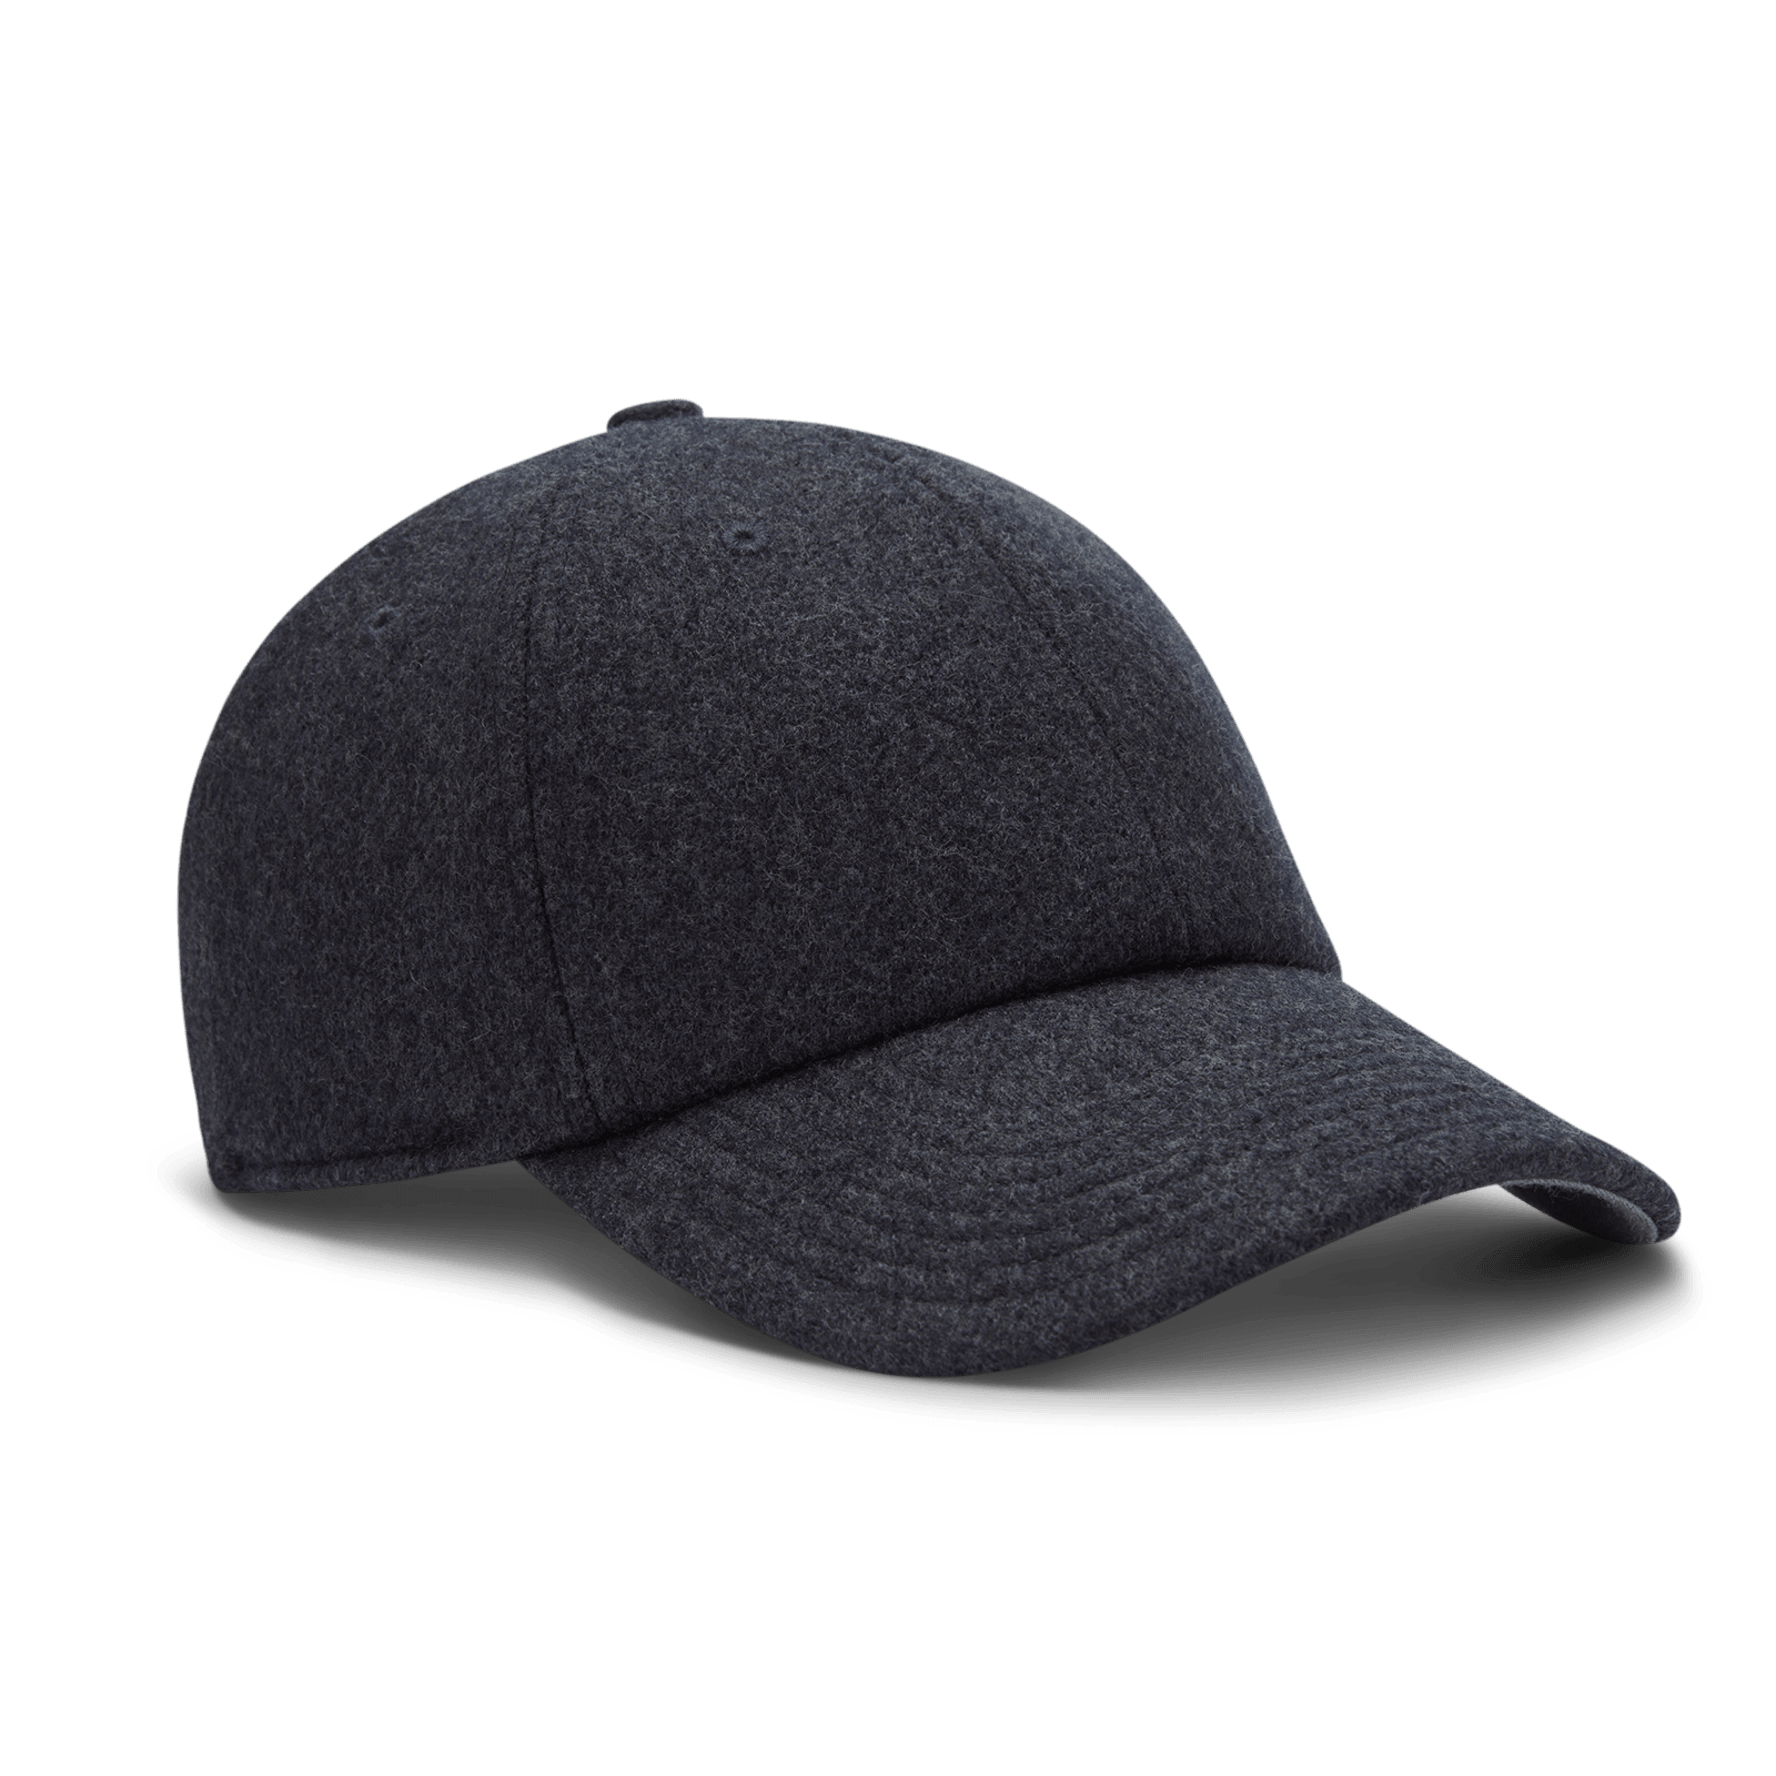 The Cap, Baseball Hat